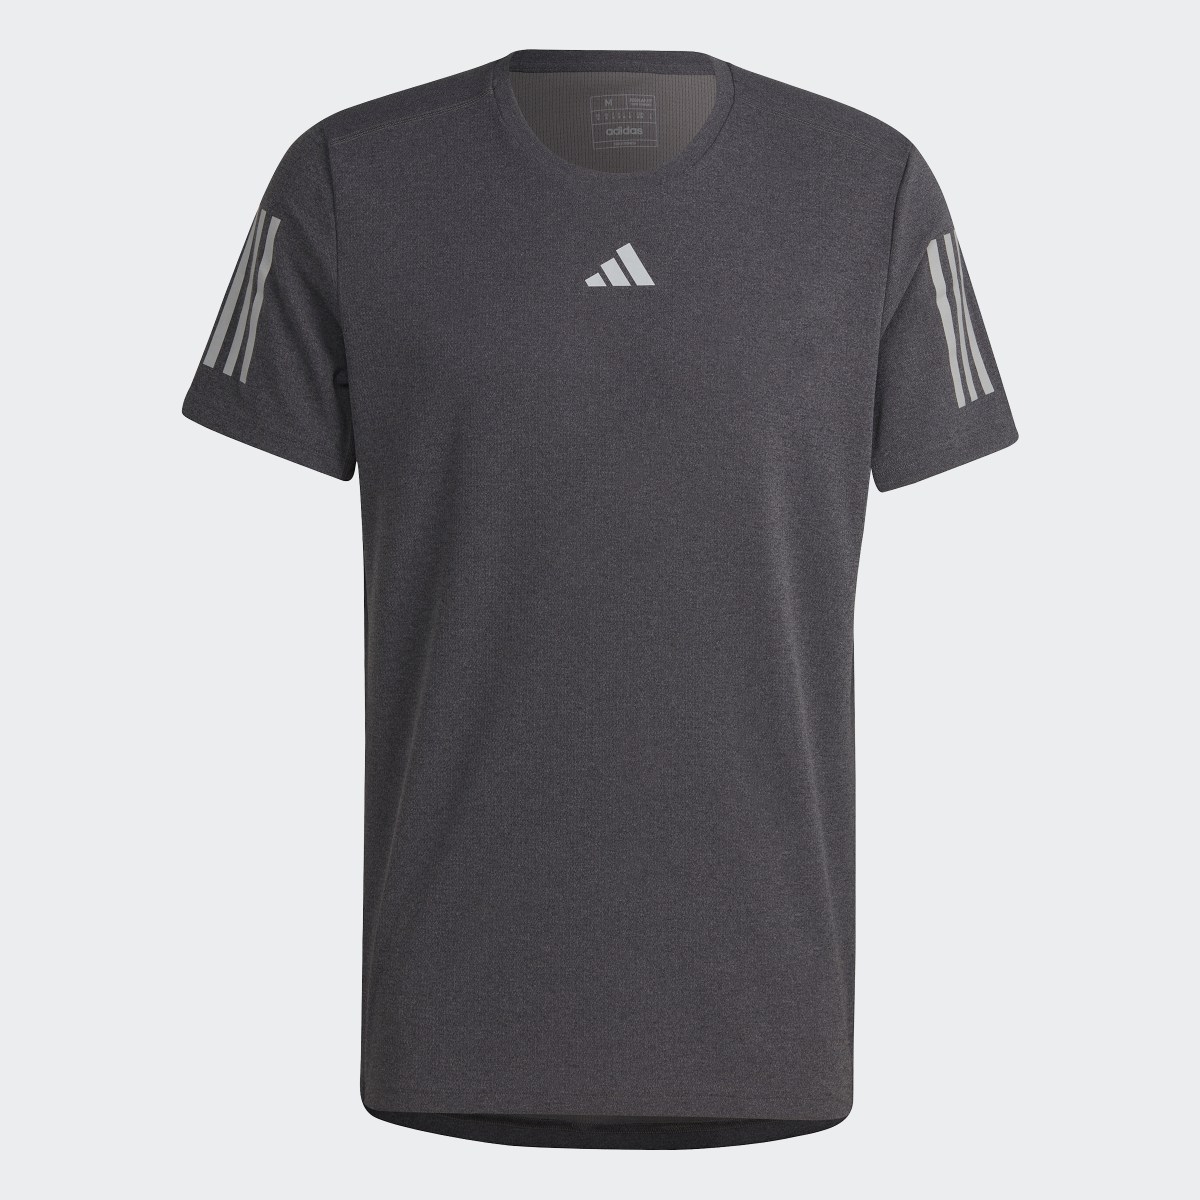 Adidas Own the Run Heather T-Shirt. 5